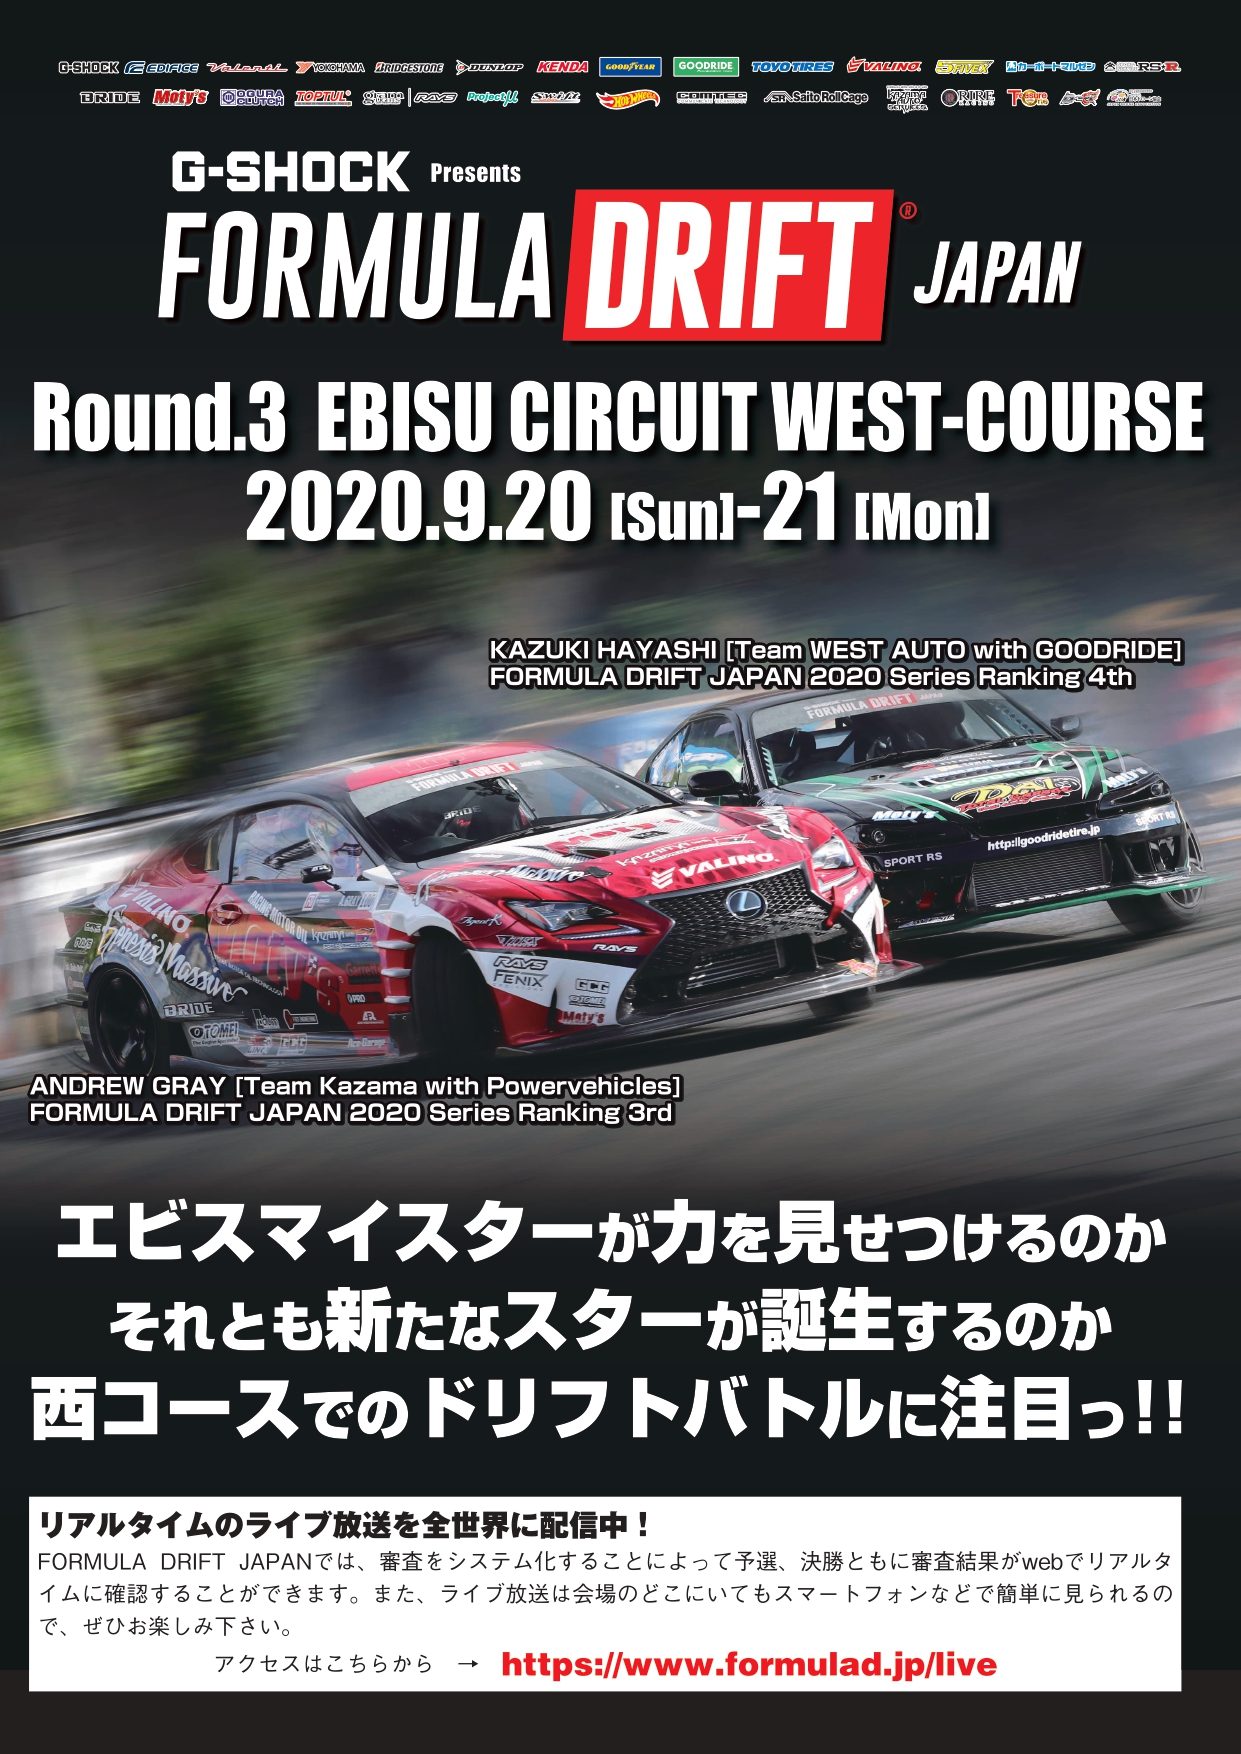 FORMULA DRIFT JAPAN – EBISU CIRCUIT WEST-COURSE (2020.9.20 / 21)